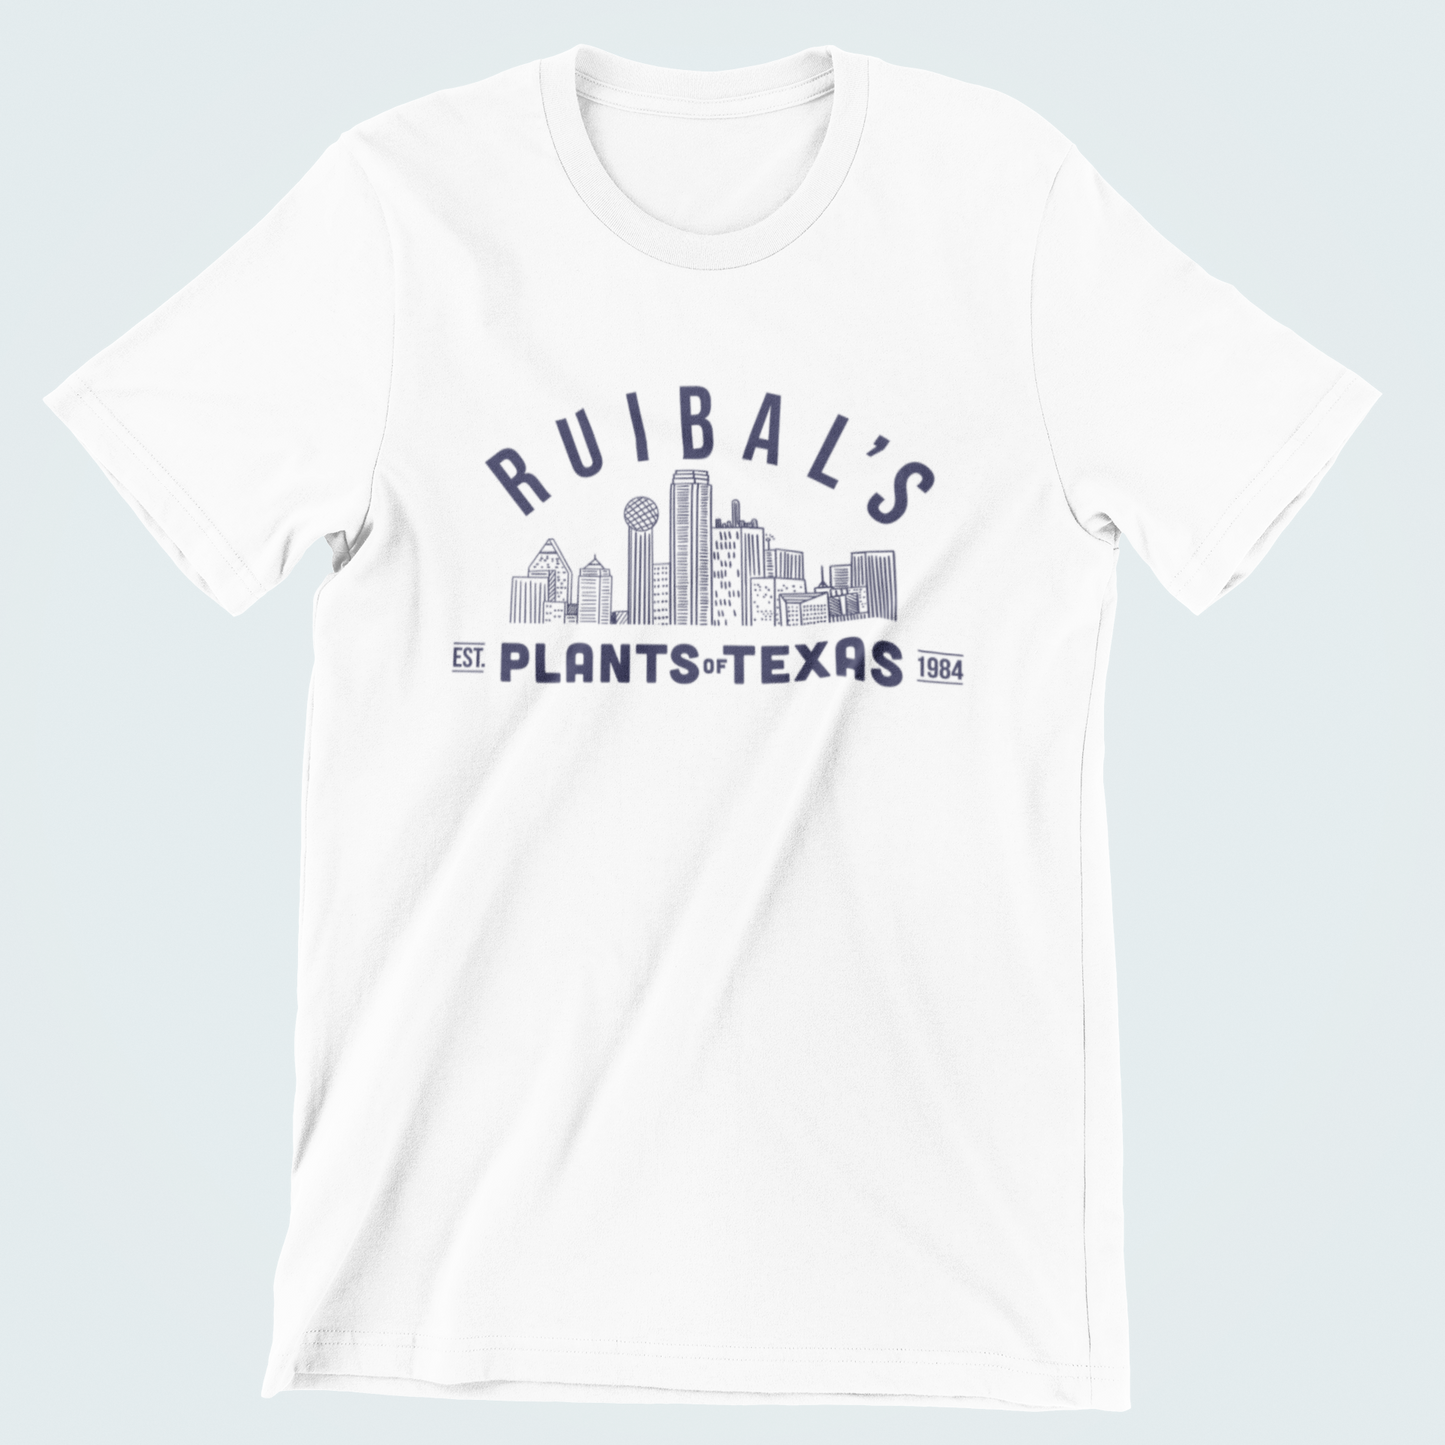 Ruibal's Plants of Texas - Custom T-Shirt